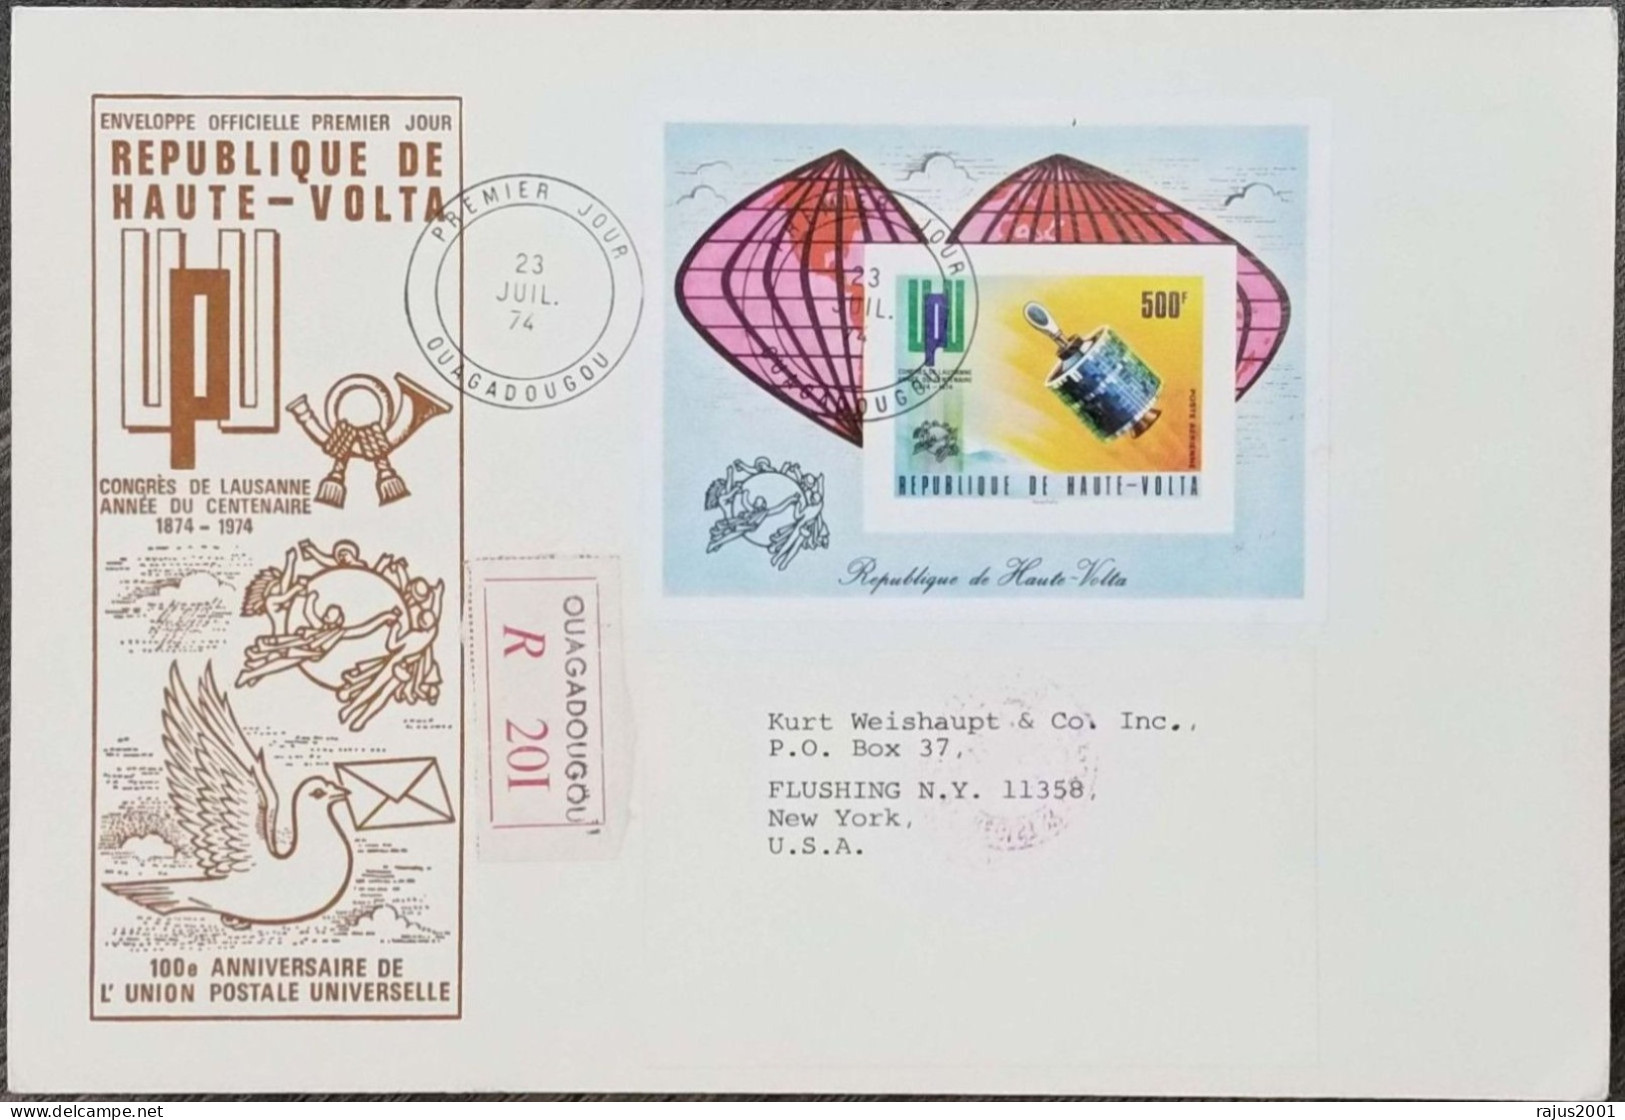 Centenary Of Universal Union Postal, U.P.U, UPU, Satellite, IMPERF MS Circulated Registered Cover FDC 1974 Upper Volta - WPV (Weltpostverein)